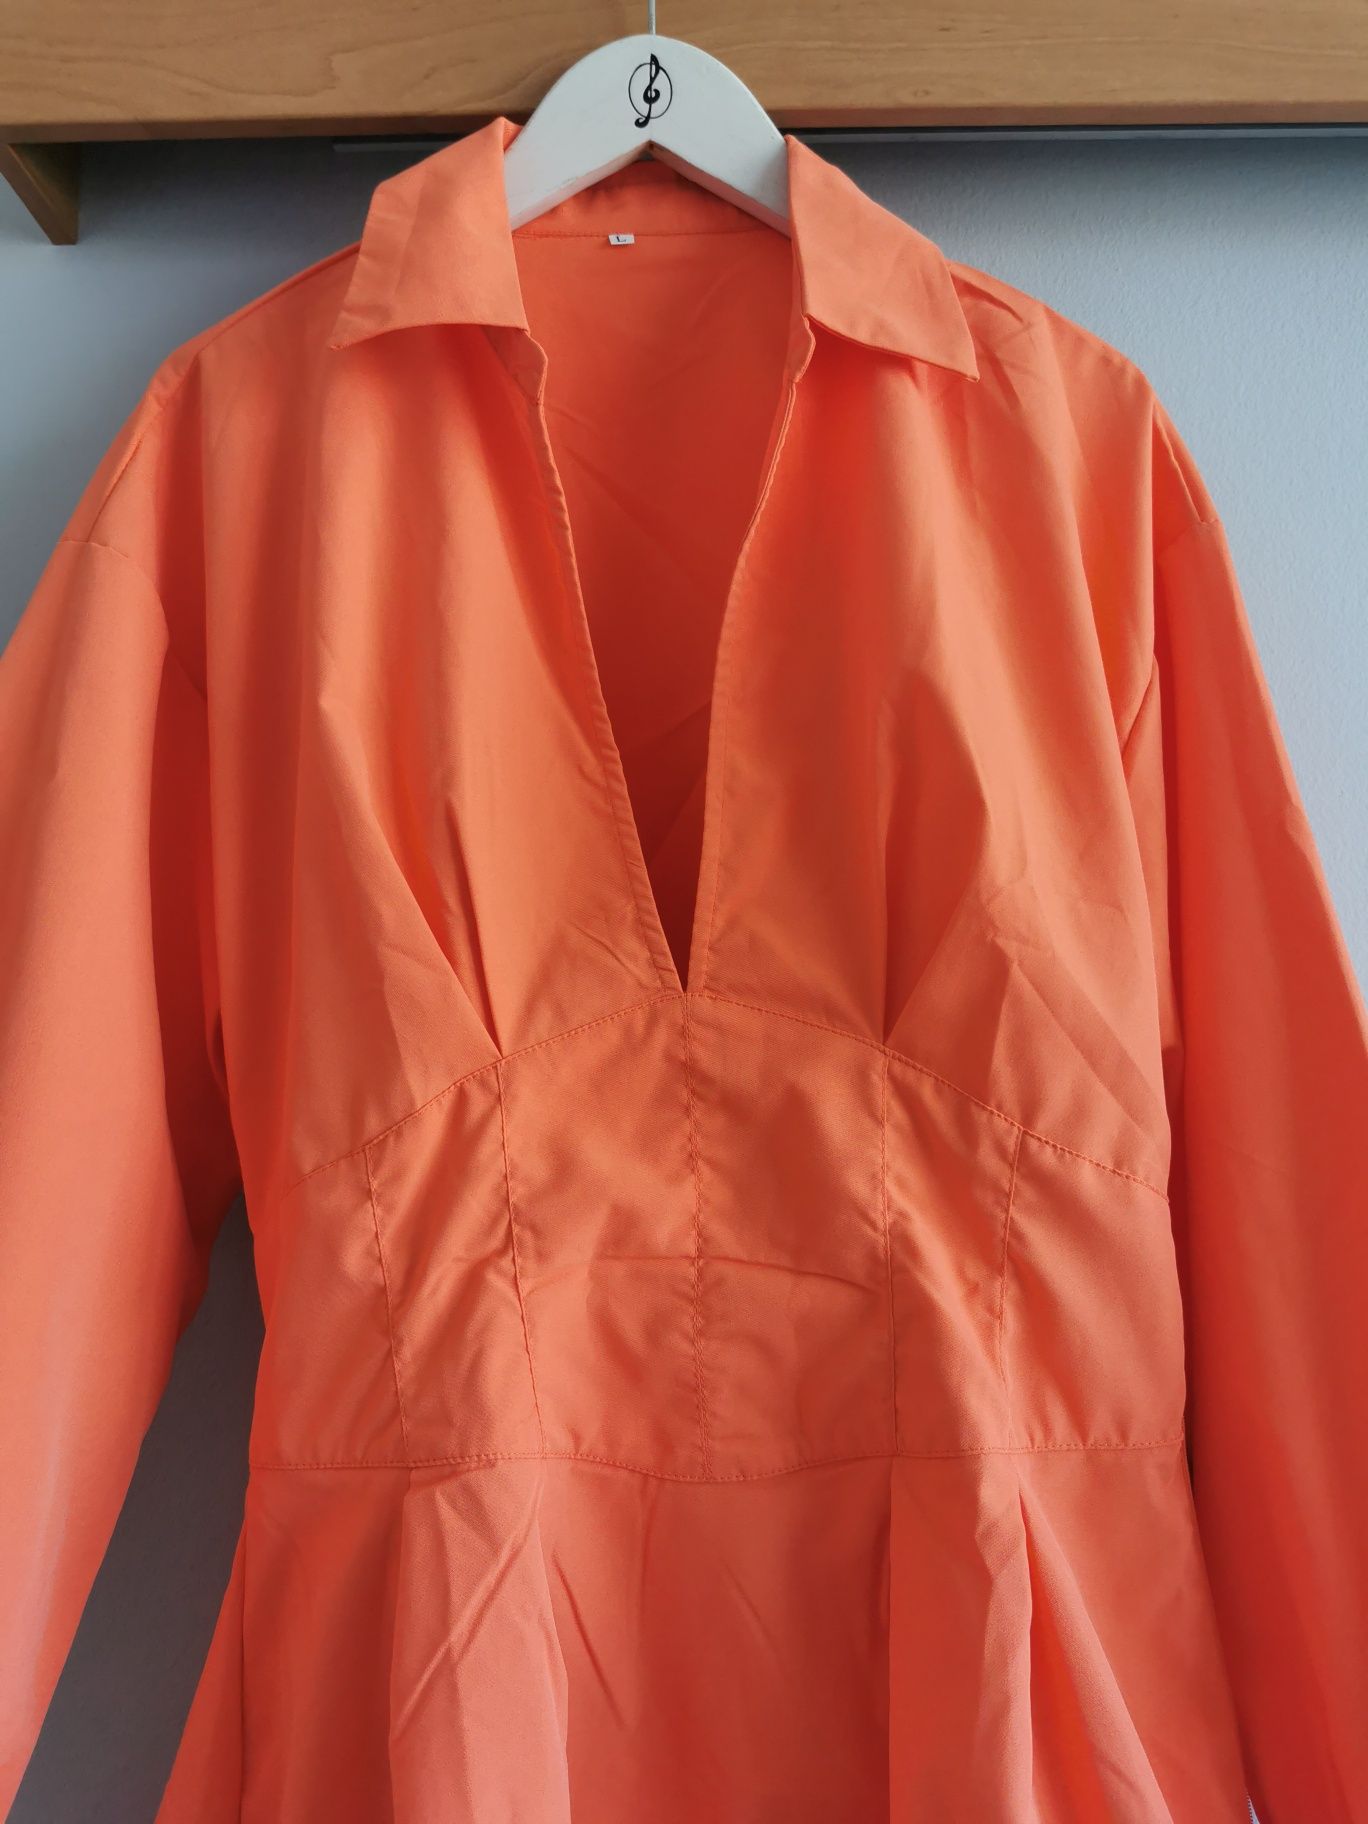 Pomarańczowa gorsetowa sukienka dekolt V 40 L Orange shirt dress gorse